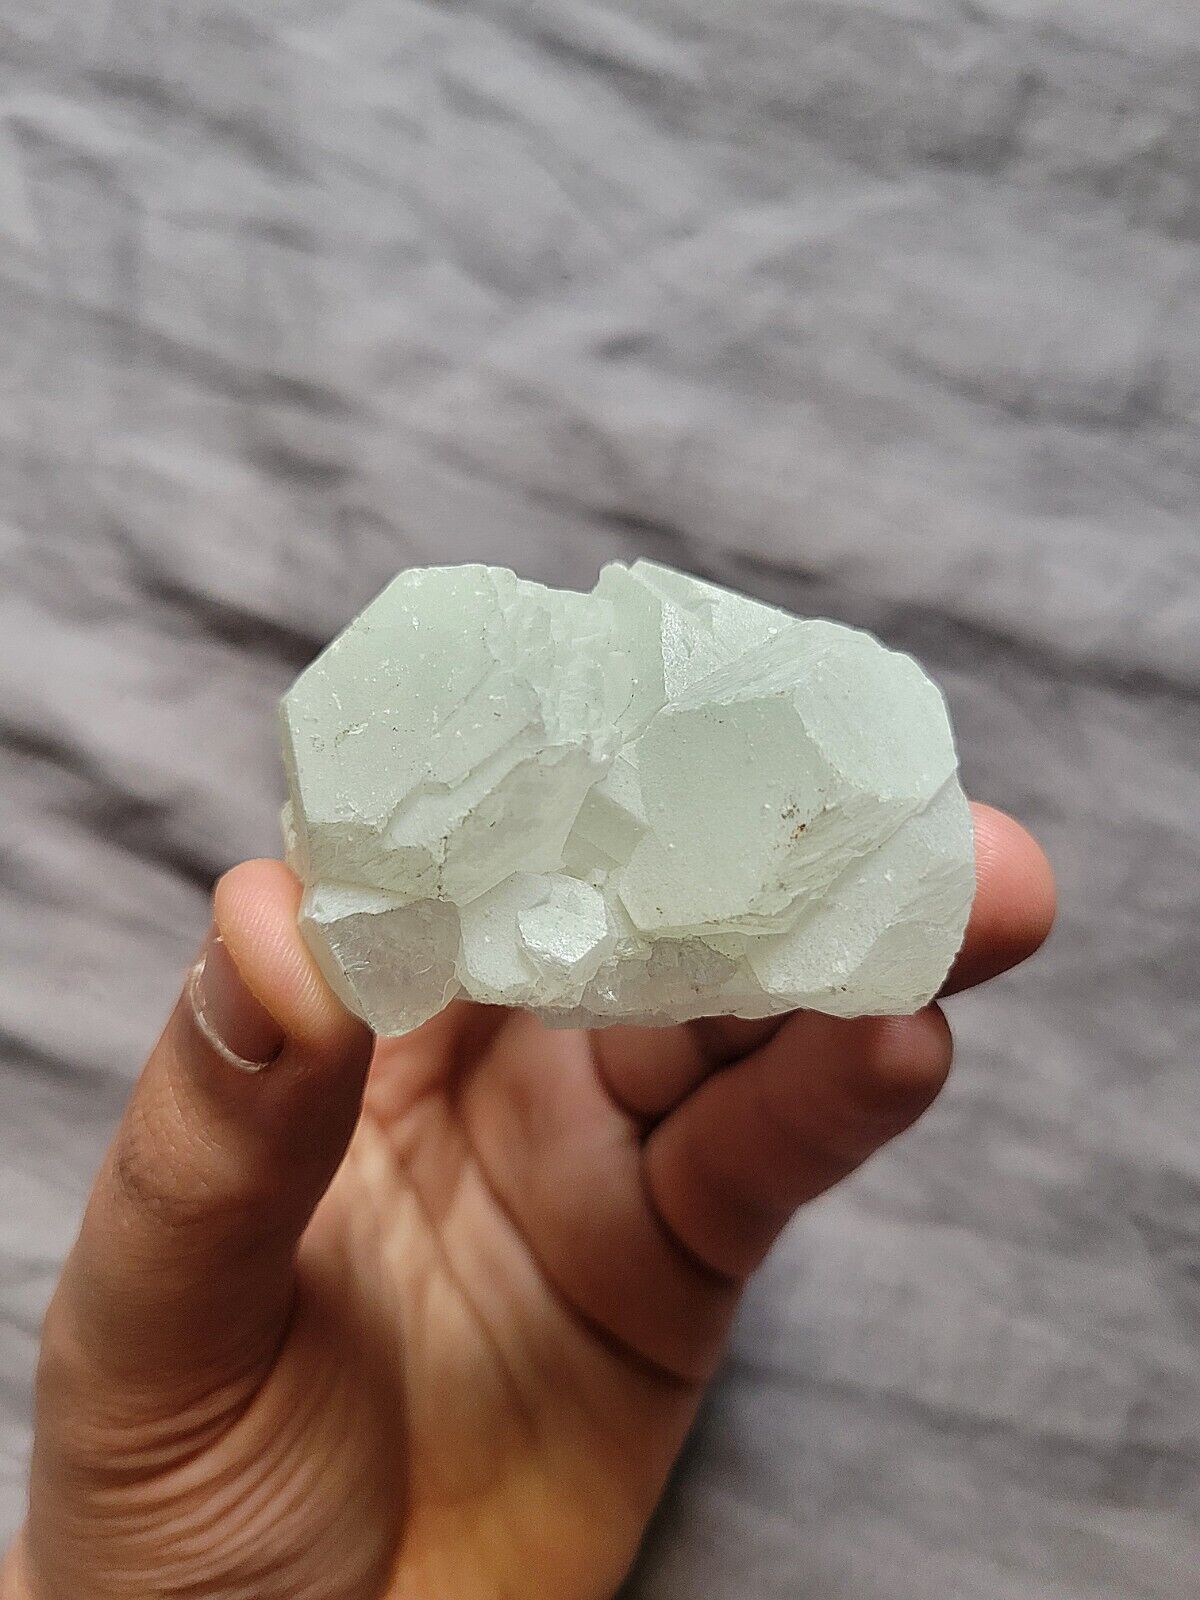 Aesthetic Crystal Apophyllite Gem Rock Stone From India